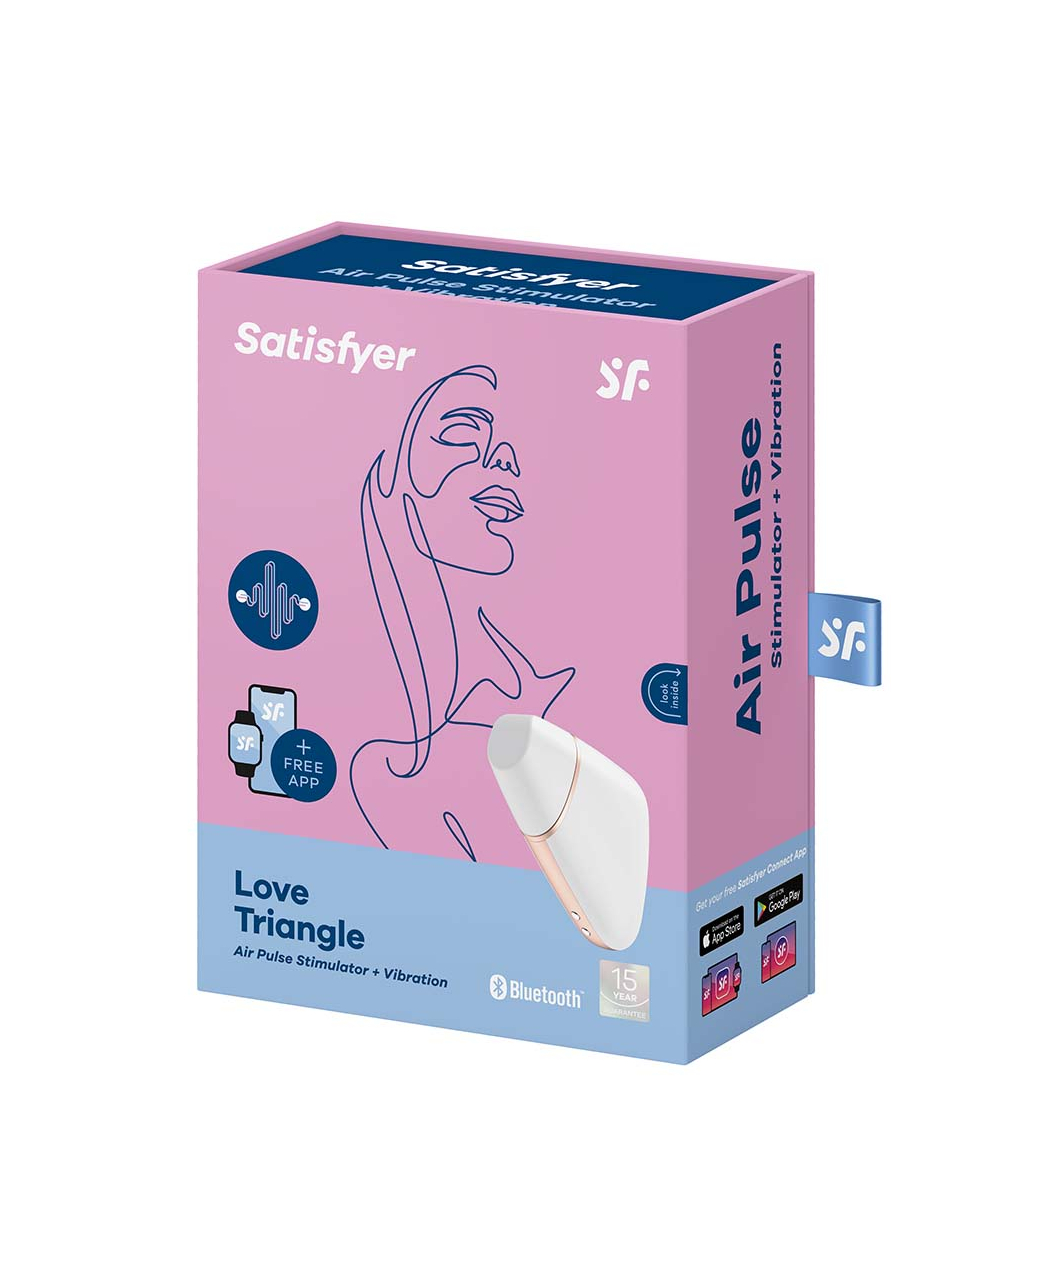 Satisfyer Love Triangle clitoral stimulator